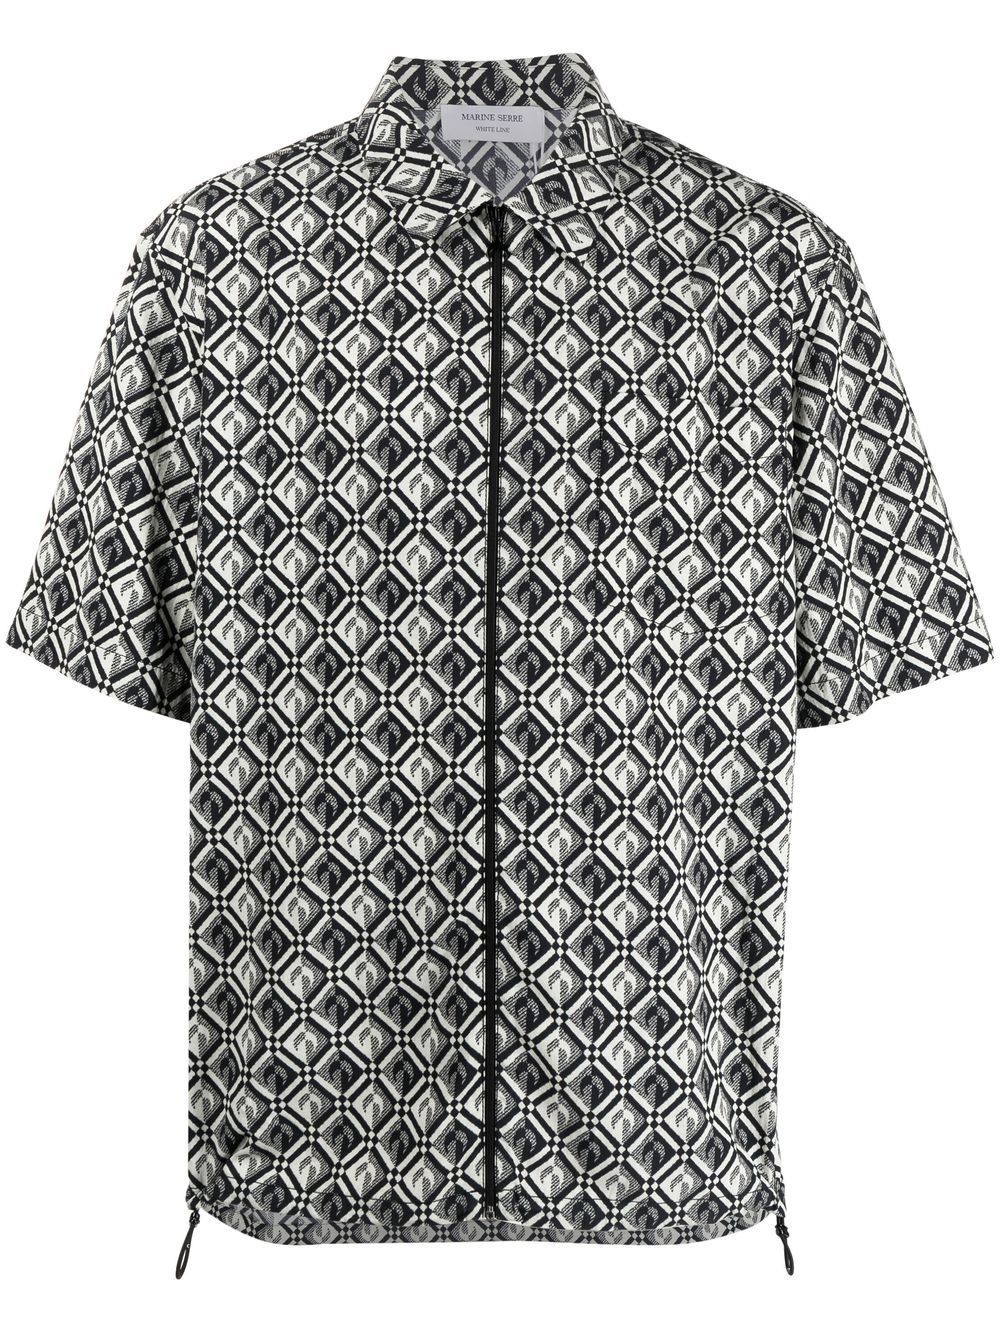 Zephyr diamond-pattern moon shirt - 1